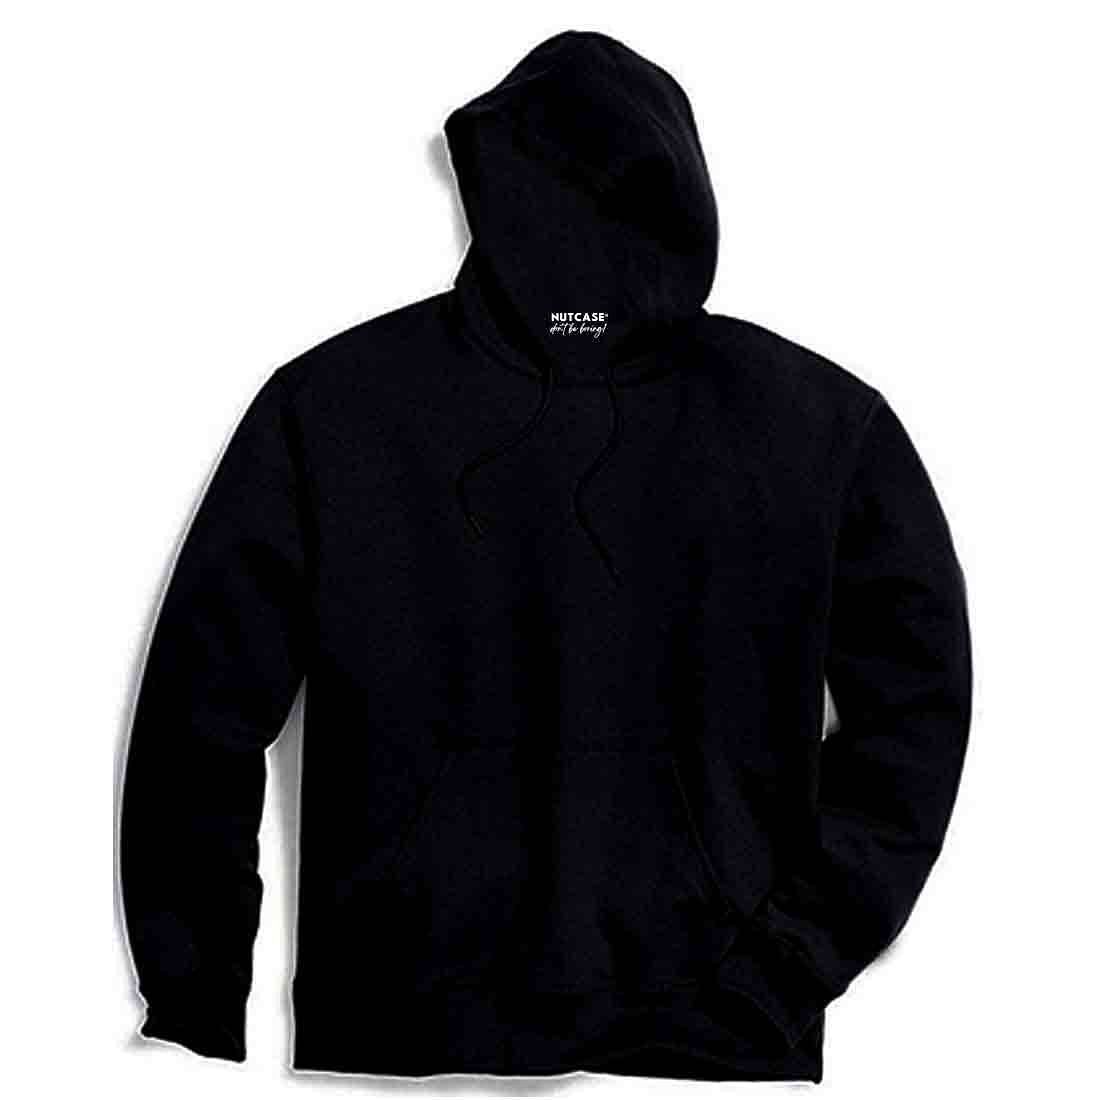 Nutcase Hoodie Stylish Jumper Sweatshirt Unisex ( Black ) - Spinner Nutcase